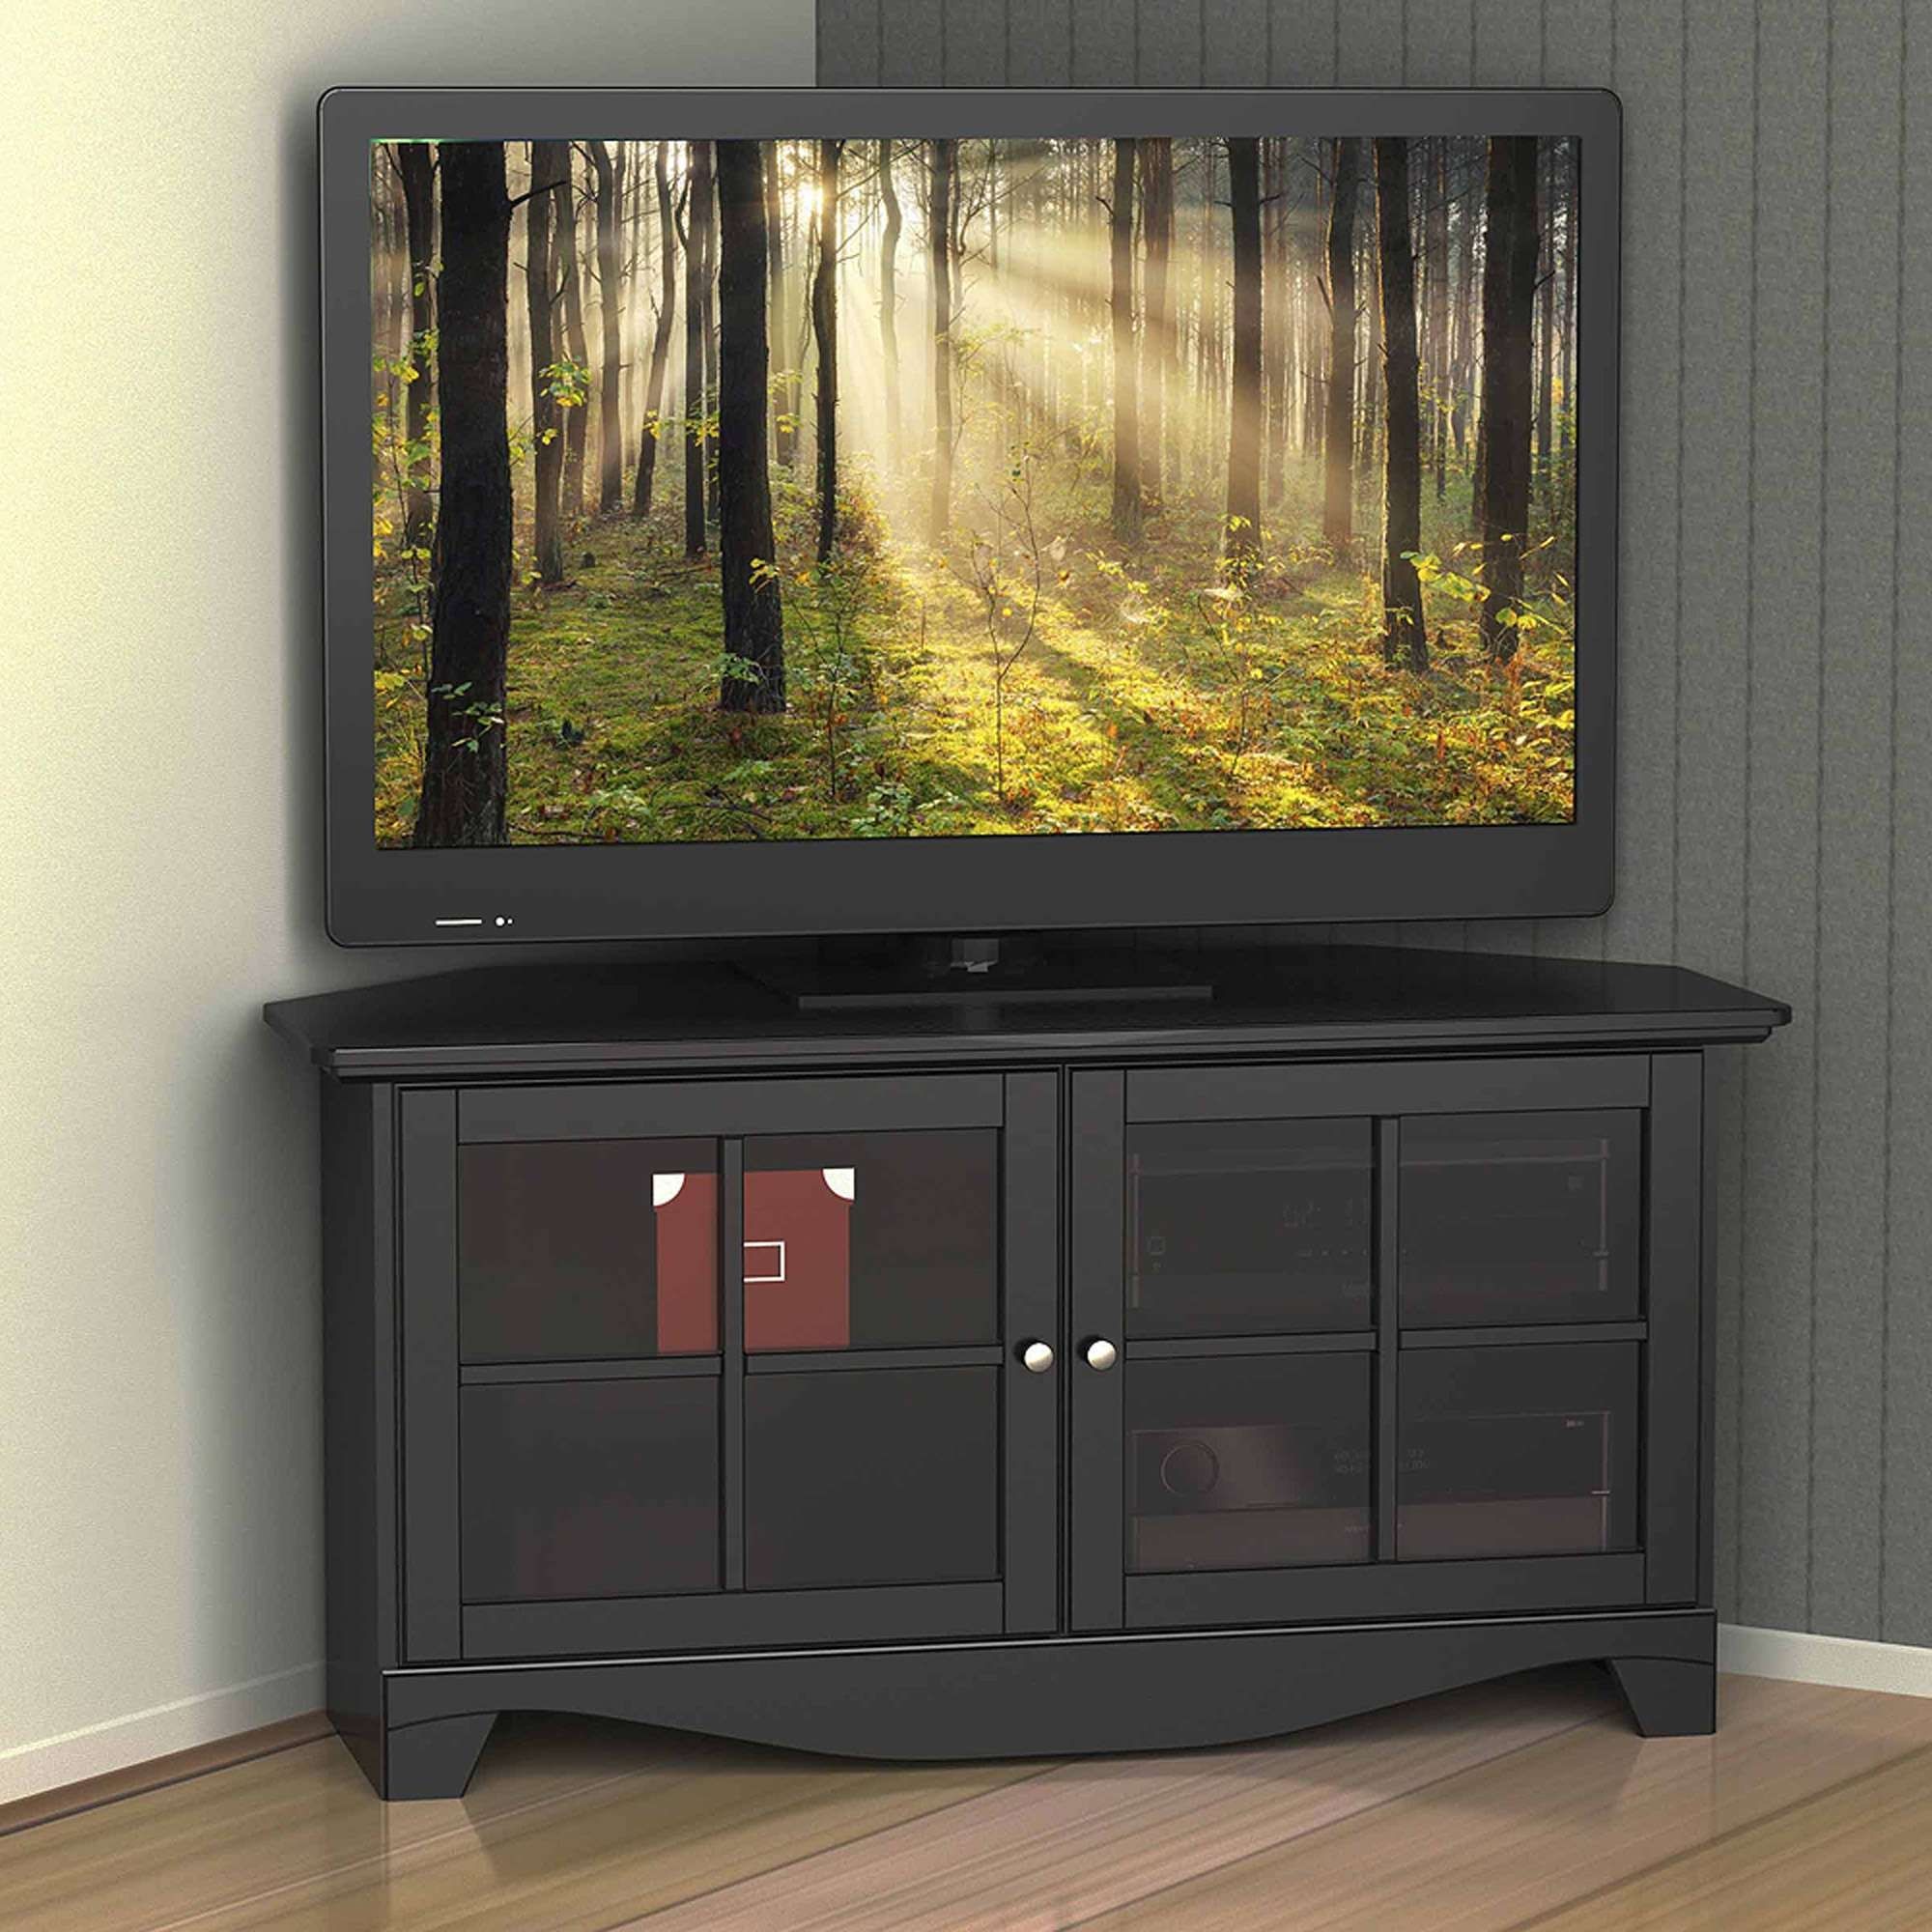 Nexera Pinnacle Black 2 Door Corner Tv Stand For Tvs Up To 49 With Regard To Black Corner Tv Cabinets (View 1 of 20)